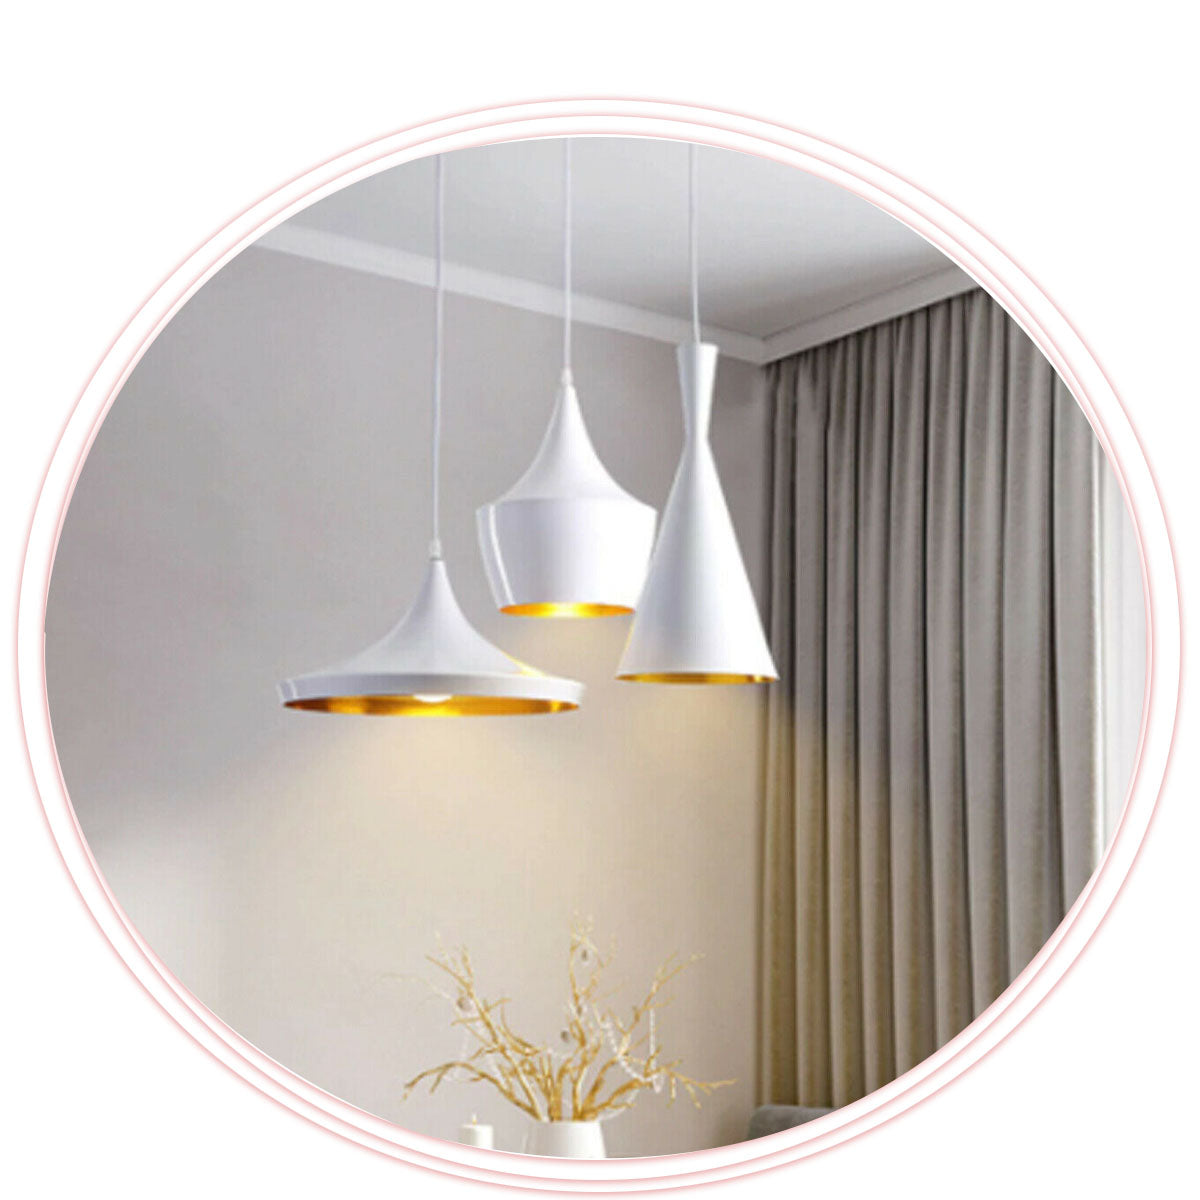 Loft Style Metal Lampshade Ceiling Hanging Pendant Light-Application image.jpg